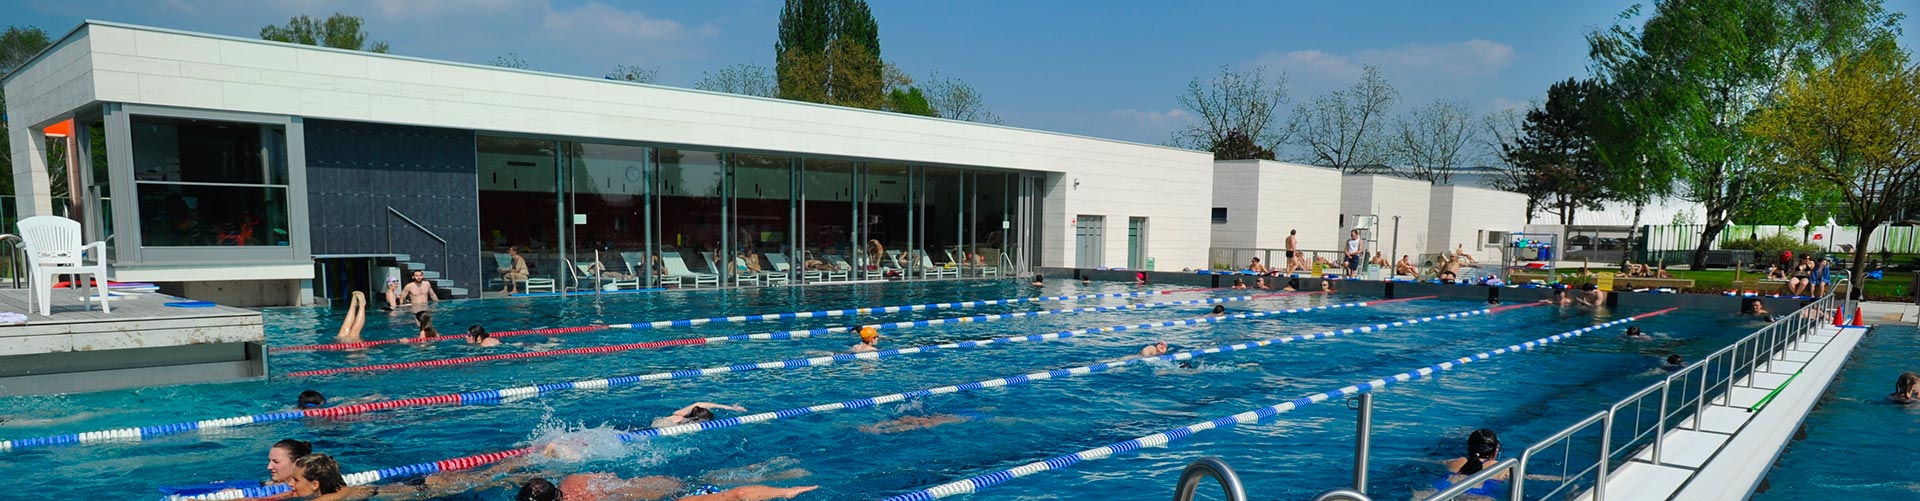 Horaires et fréquentation des piscines de Strasbourg  Strasbourg.eu